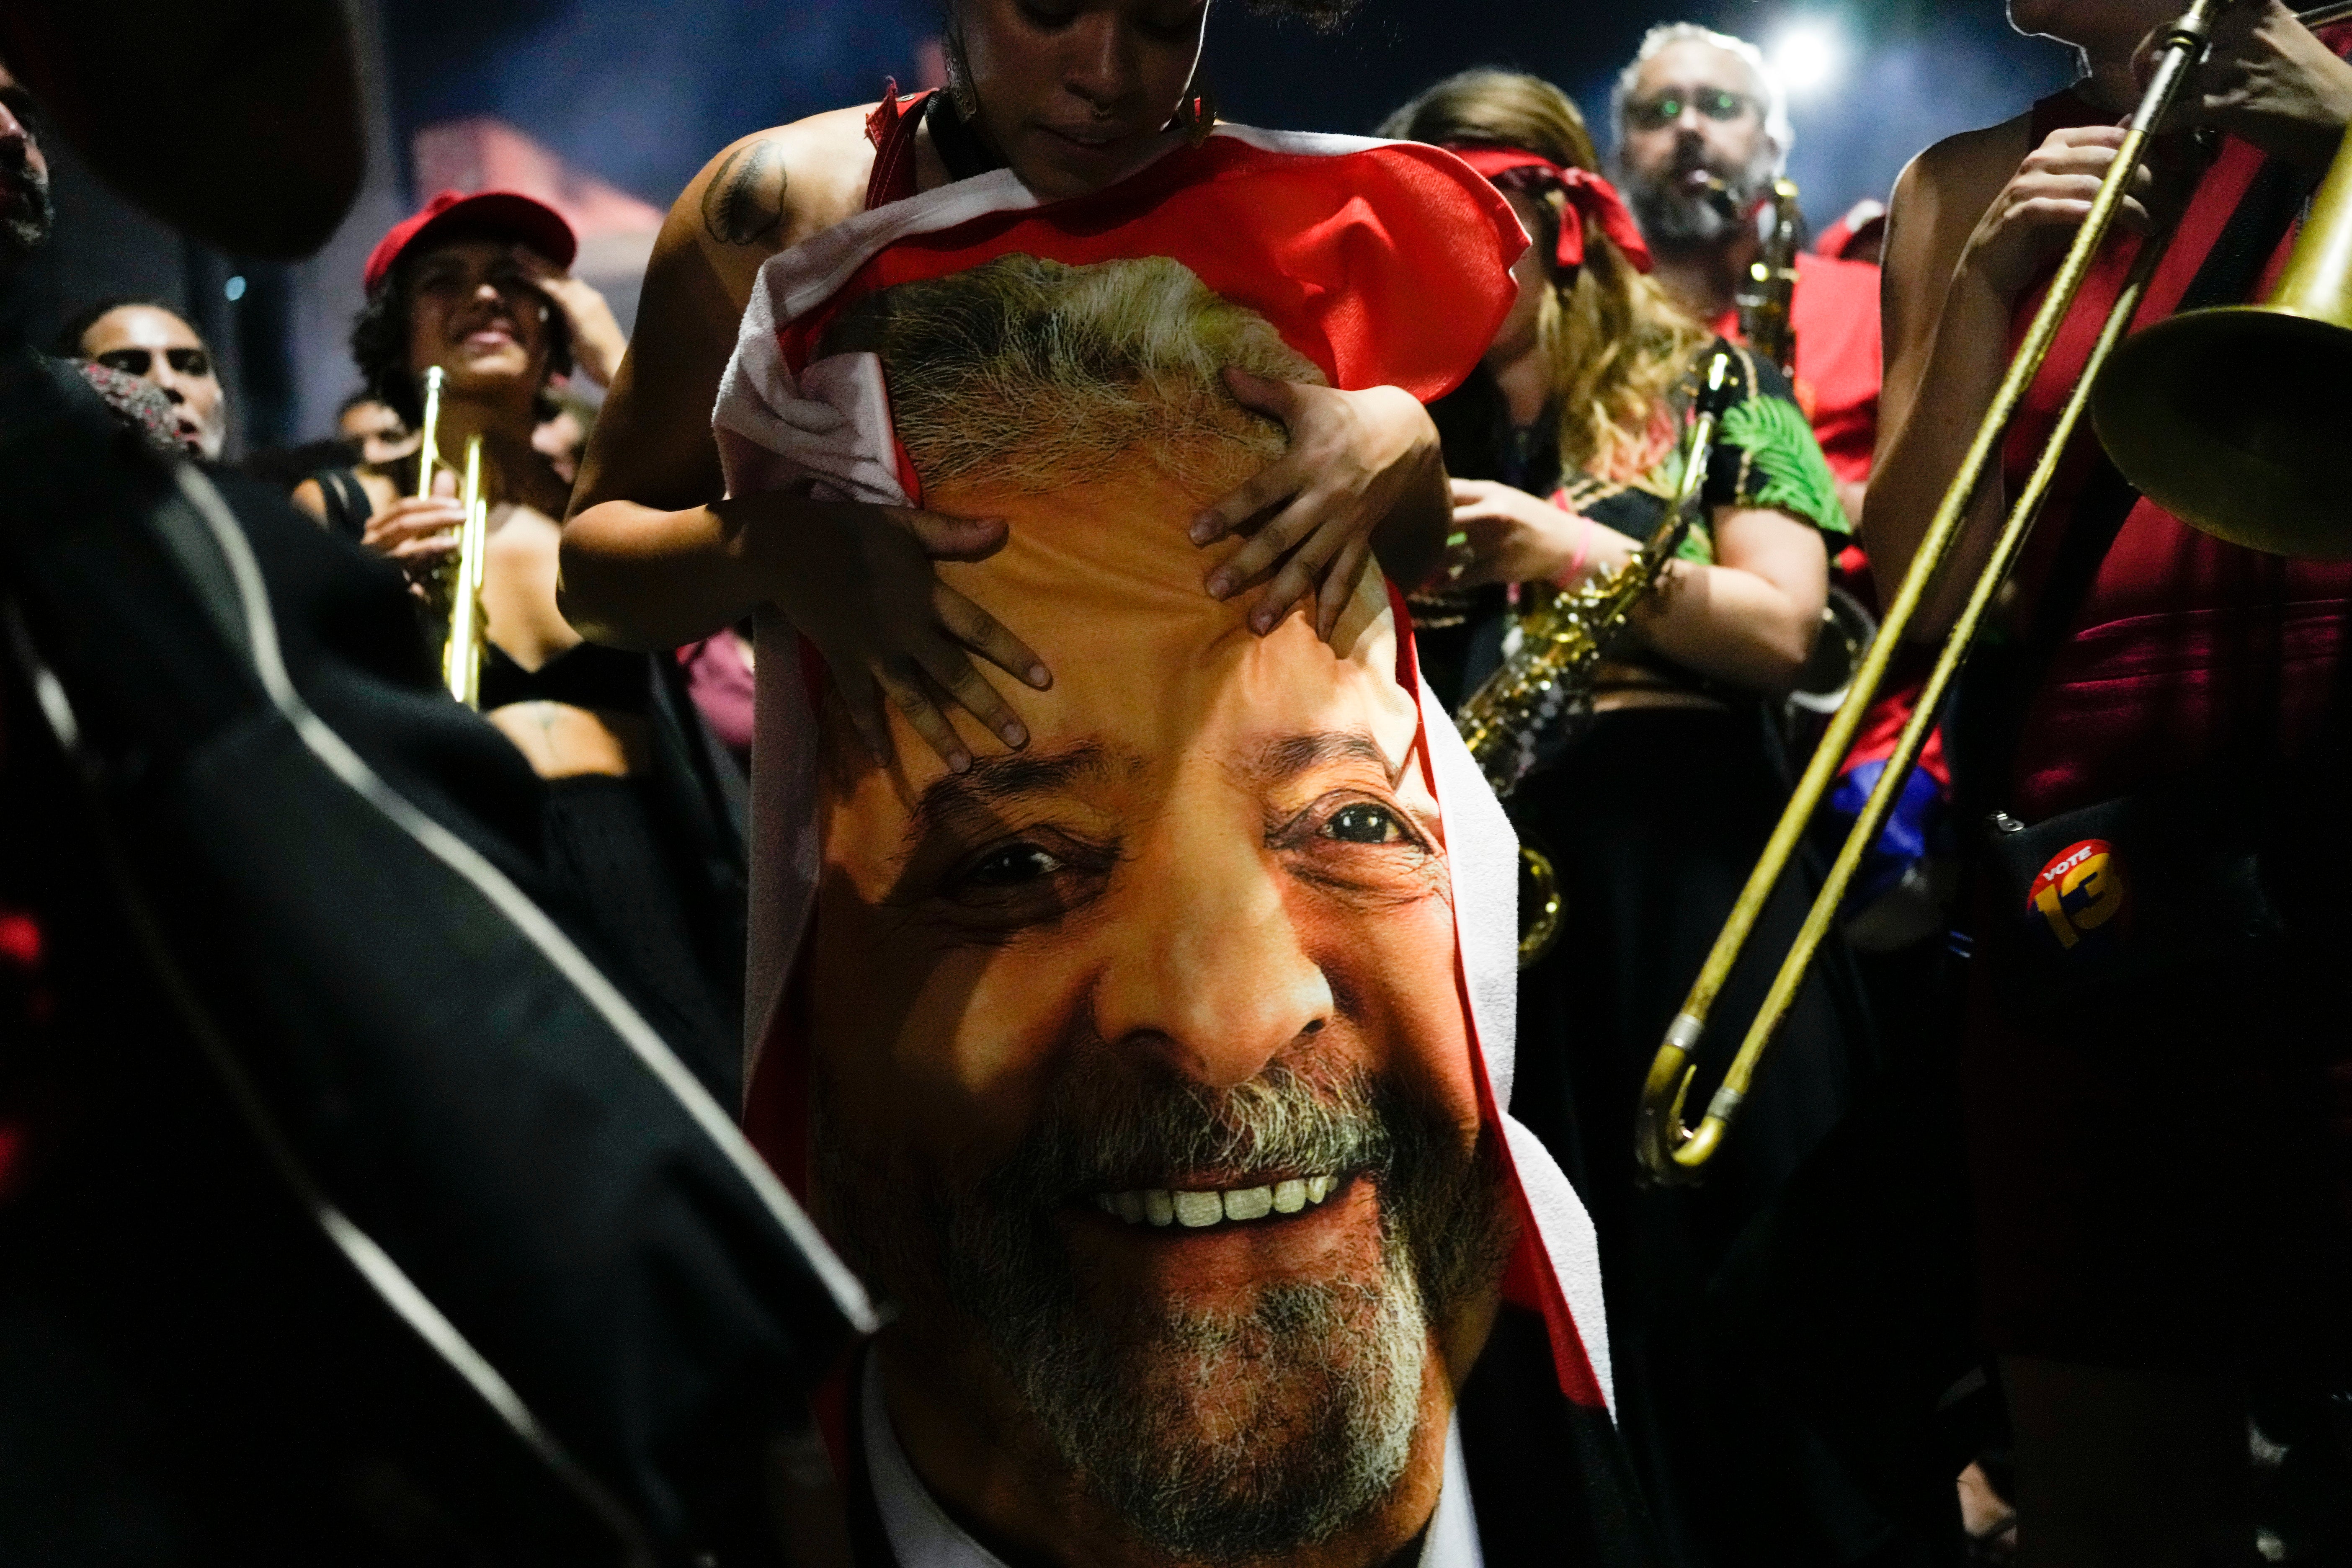 Luiz Inacio Lula da Silva achieved his landmark win in the presidential election in Brazil on October 30